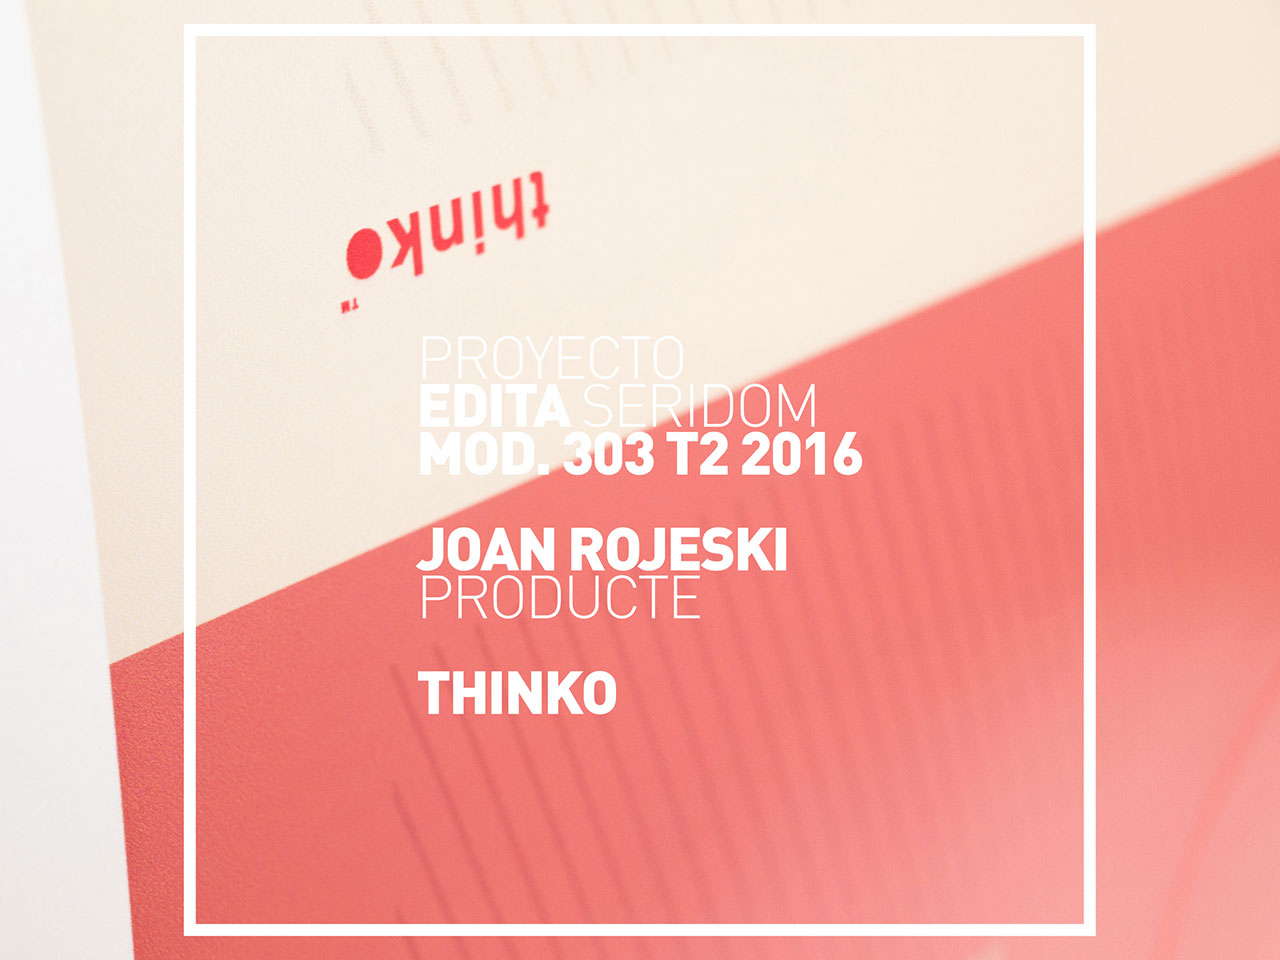 dissenycv.es-Proyecto-EDITA_Mayo-2016_Thinko_Joan-Rojeski_Prototipo-1.0-(00)